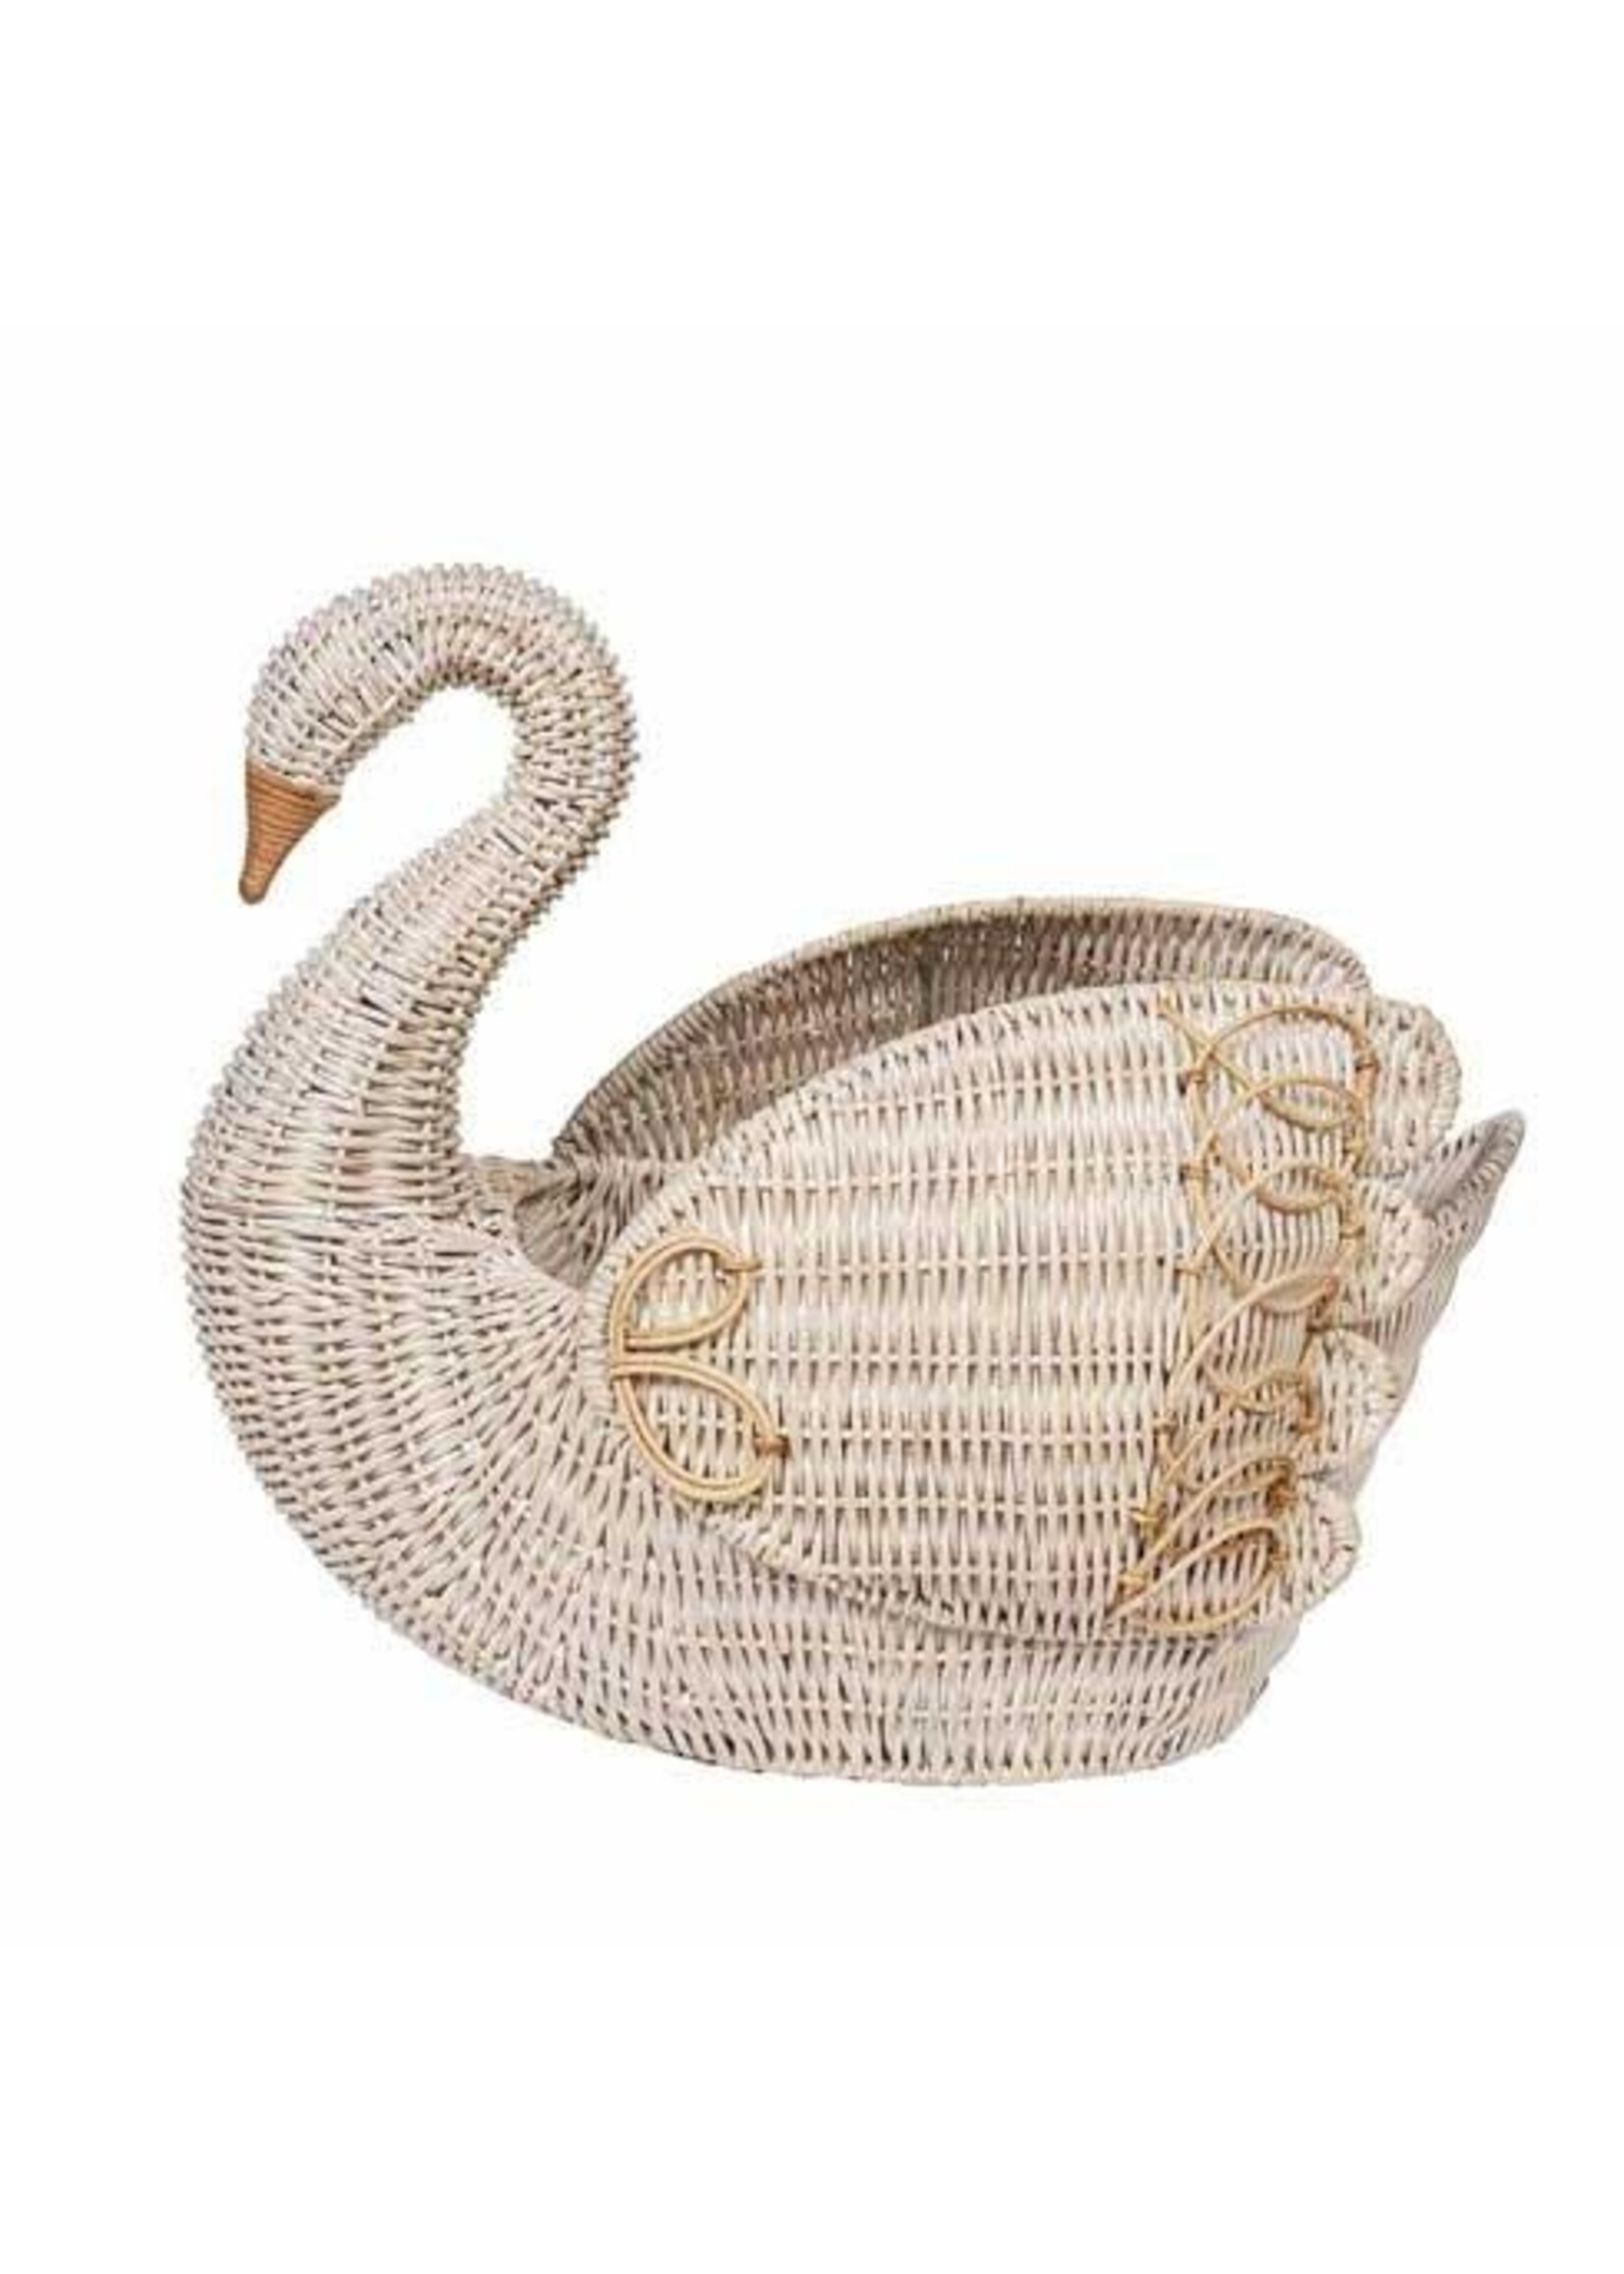 Juliska Provence Rattan Medium Swan Basket - Whitewash